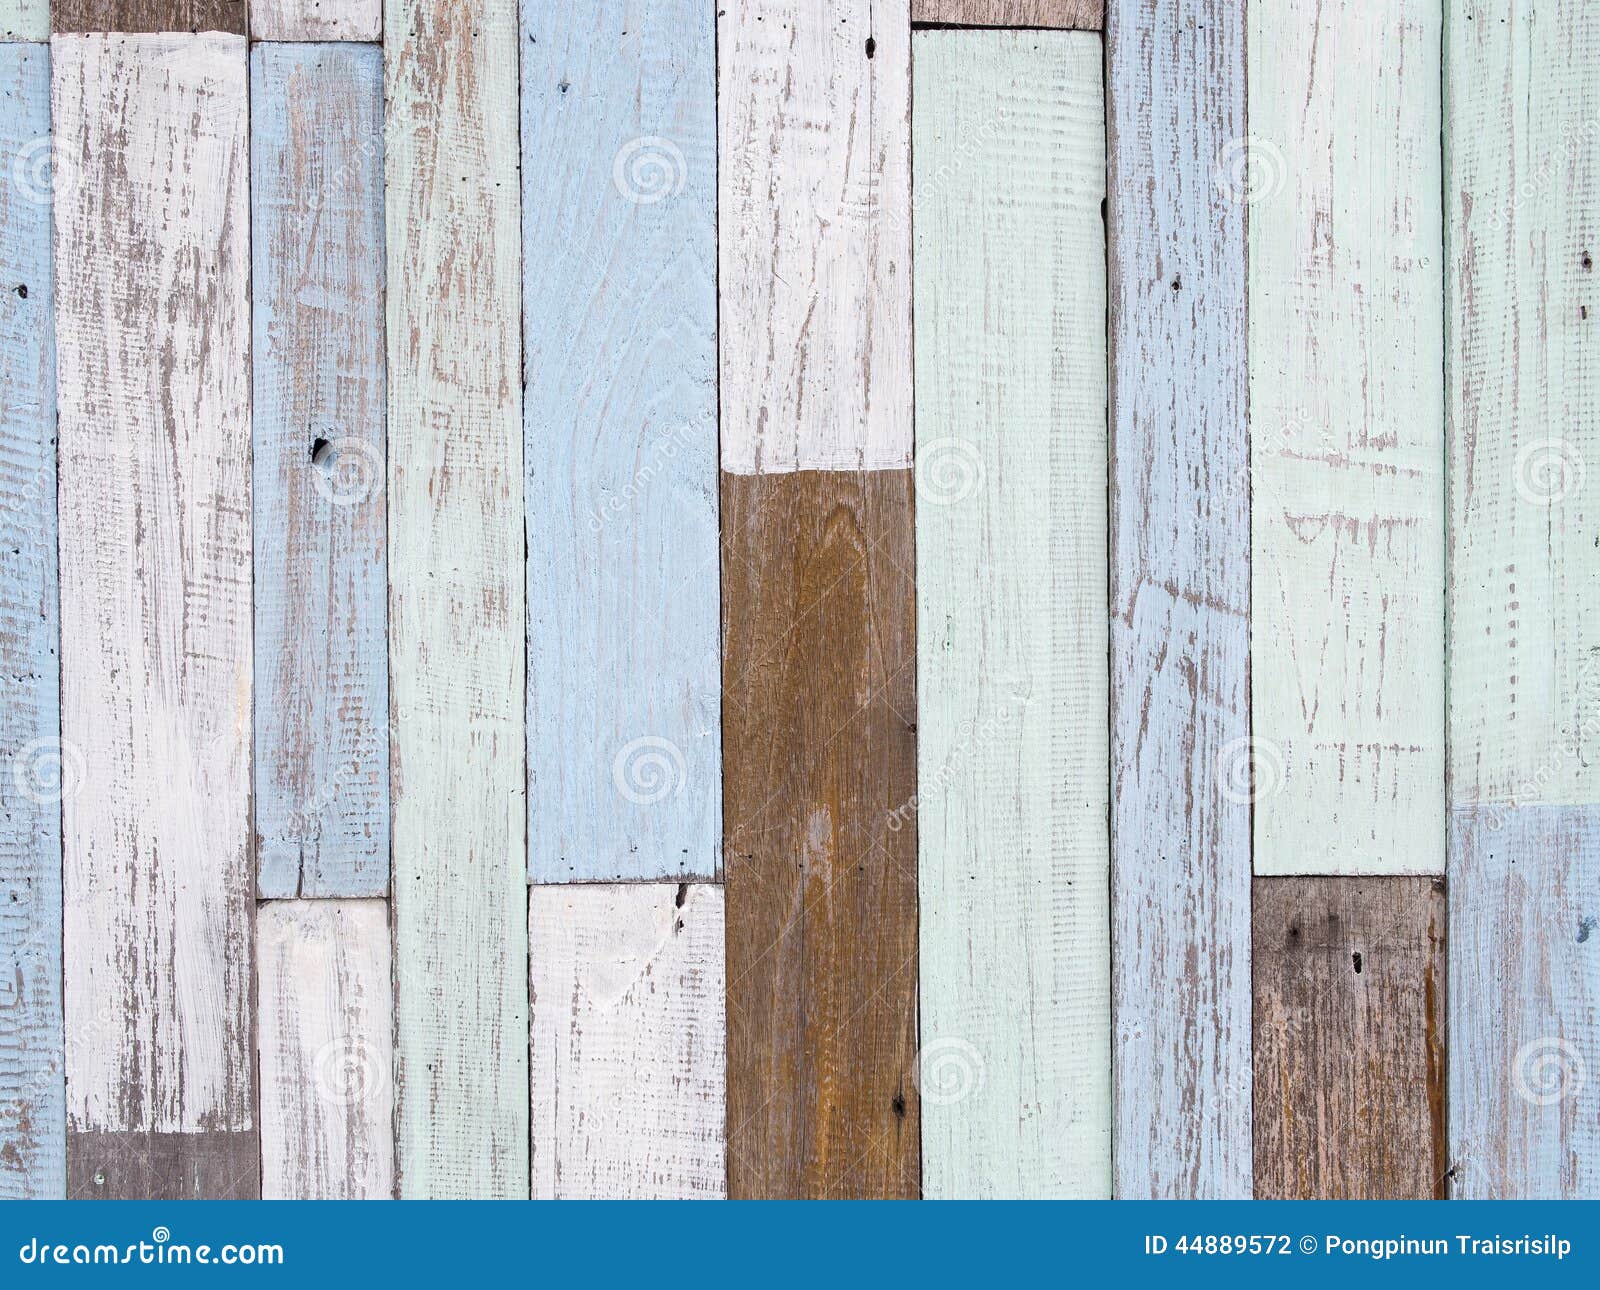 Pastel Wood Wall Texture Stock Photo - Image: 44889572